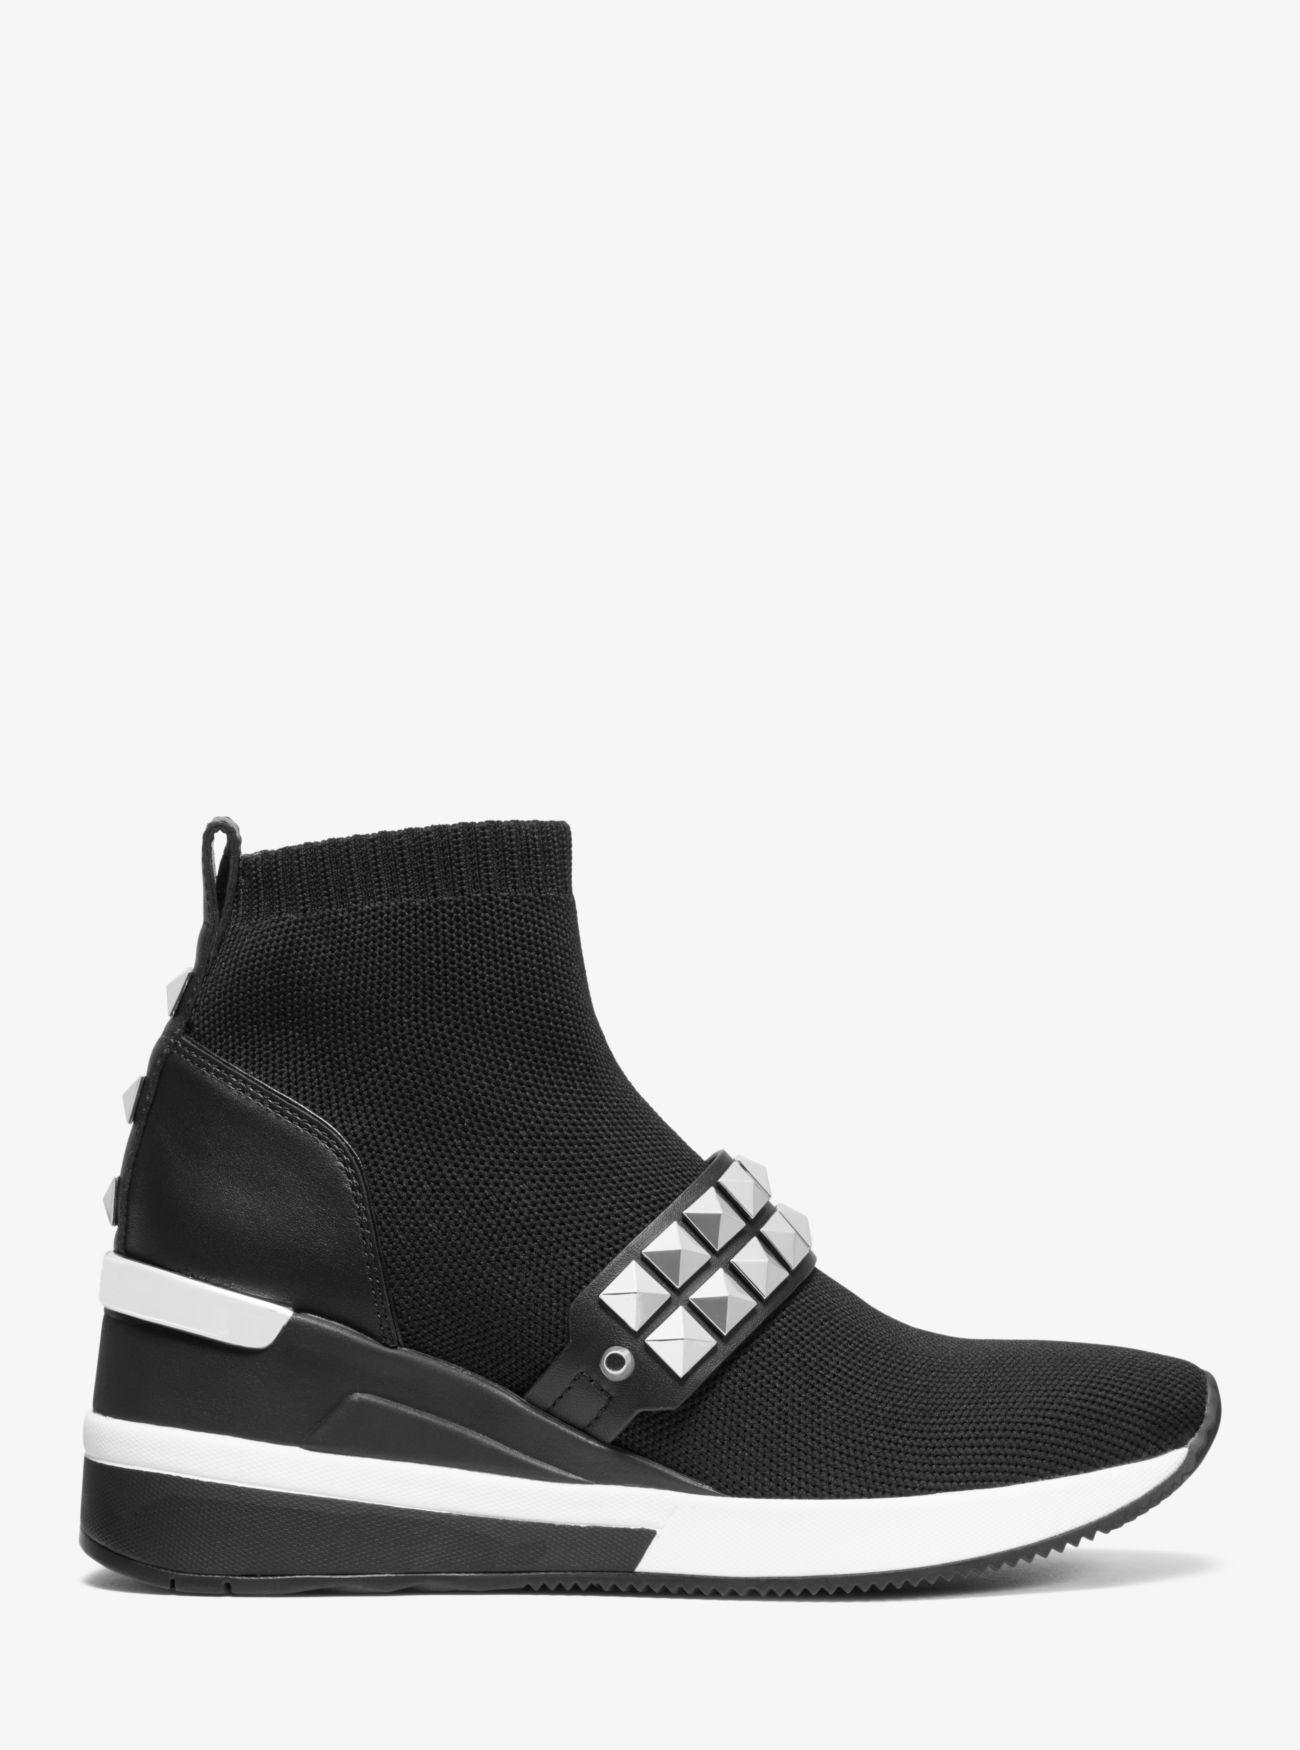 Michael Kors Leather Skyler Studded Stretch-knit Sock Sneaker in Black -  Lyst